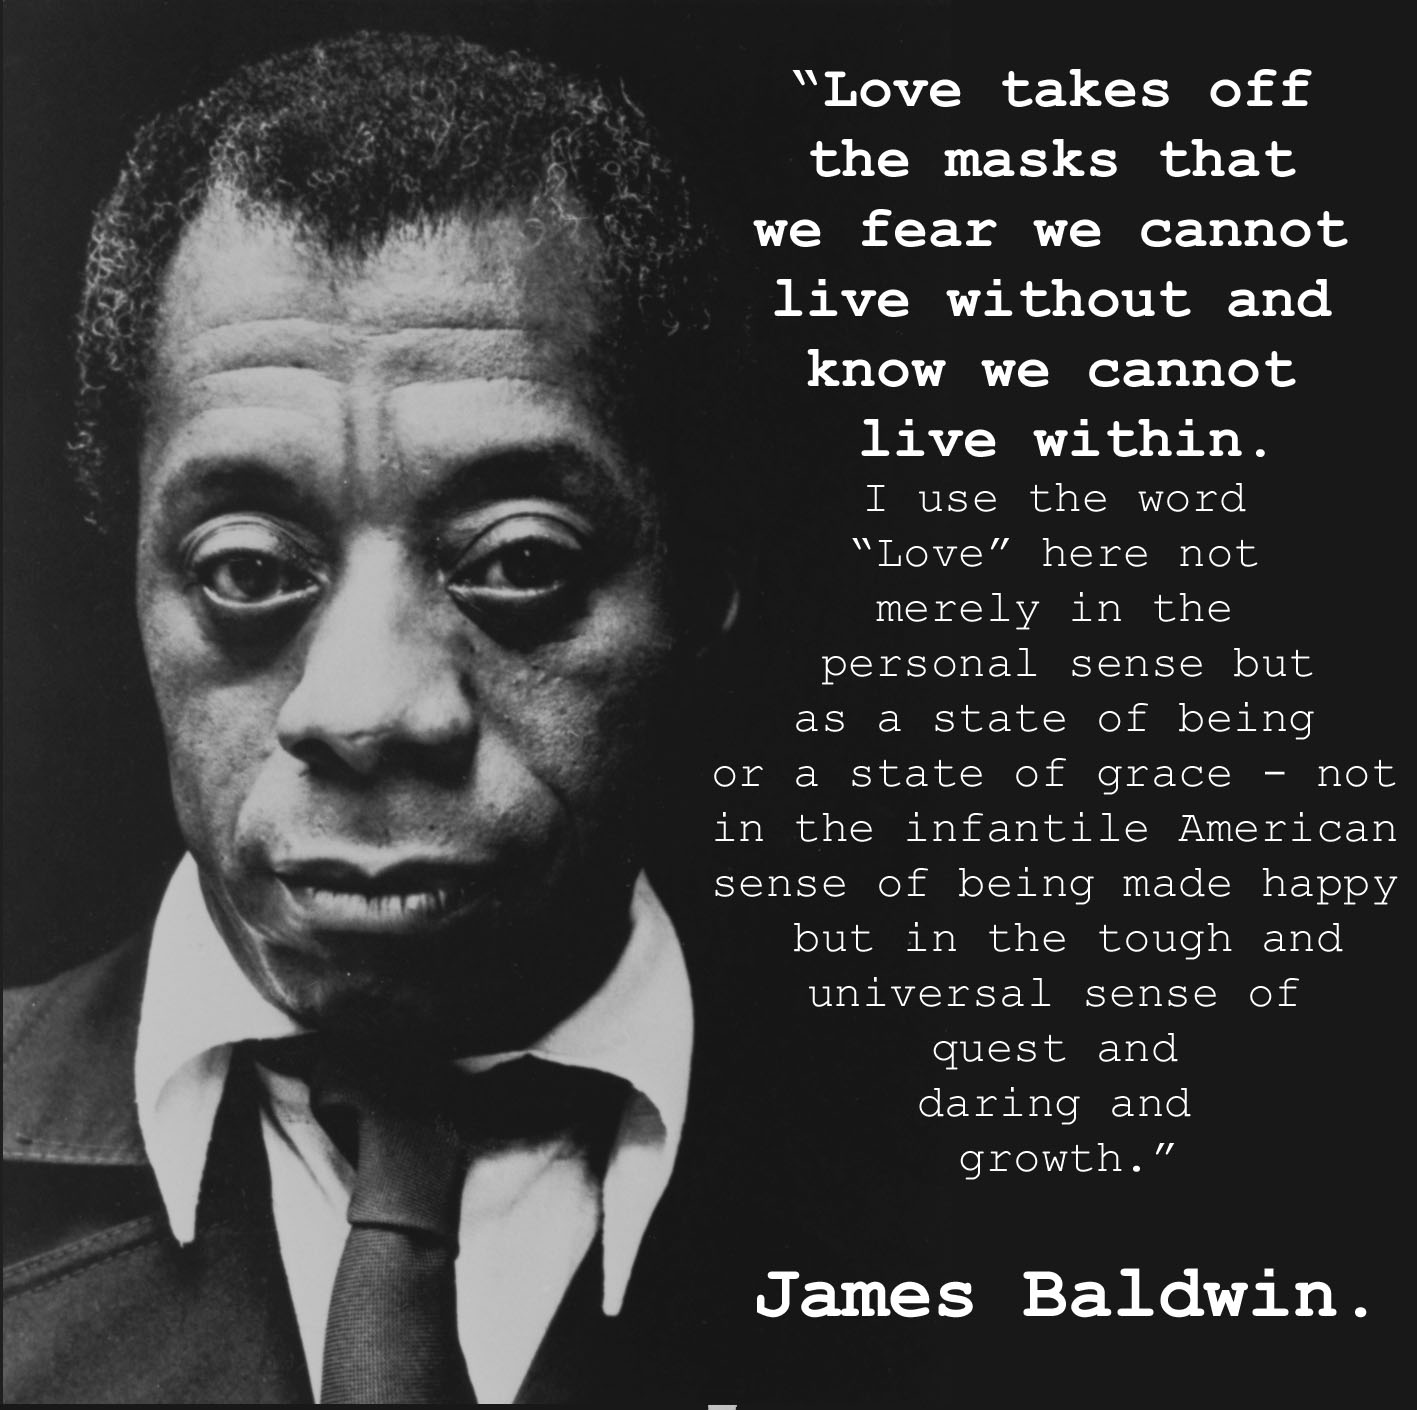 James A. Baldwin's quote #2